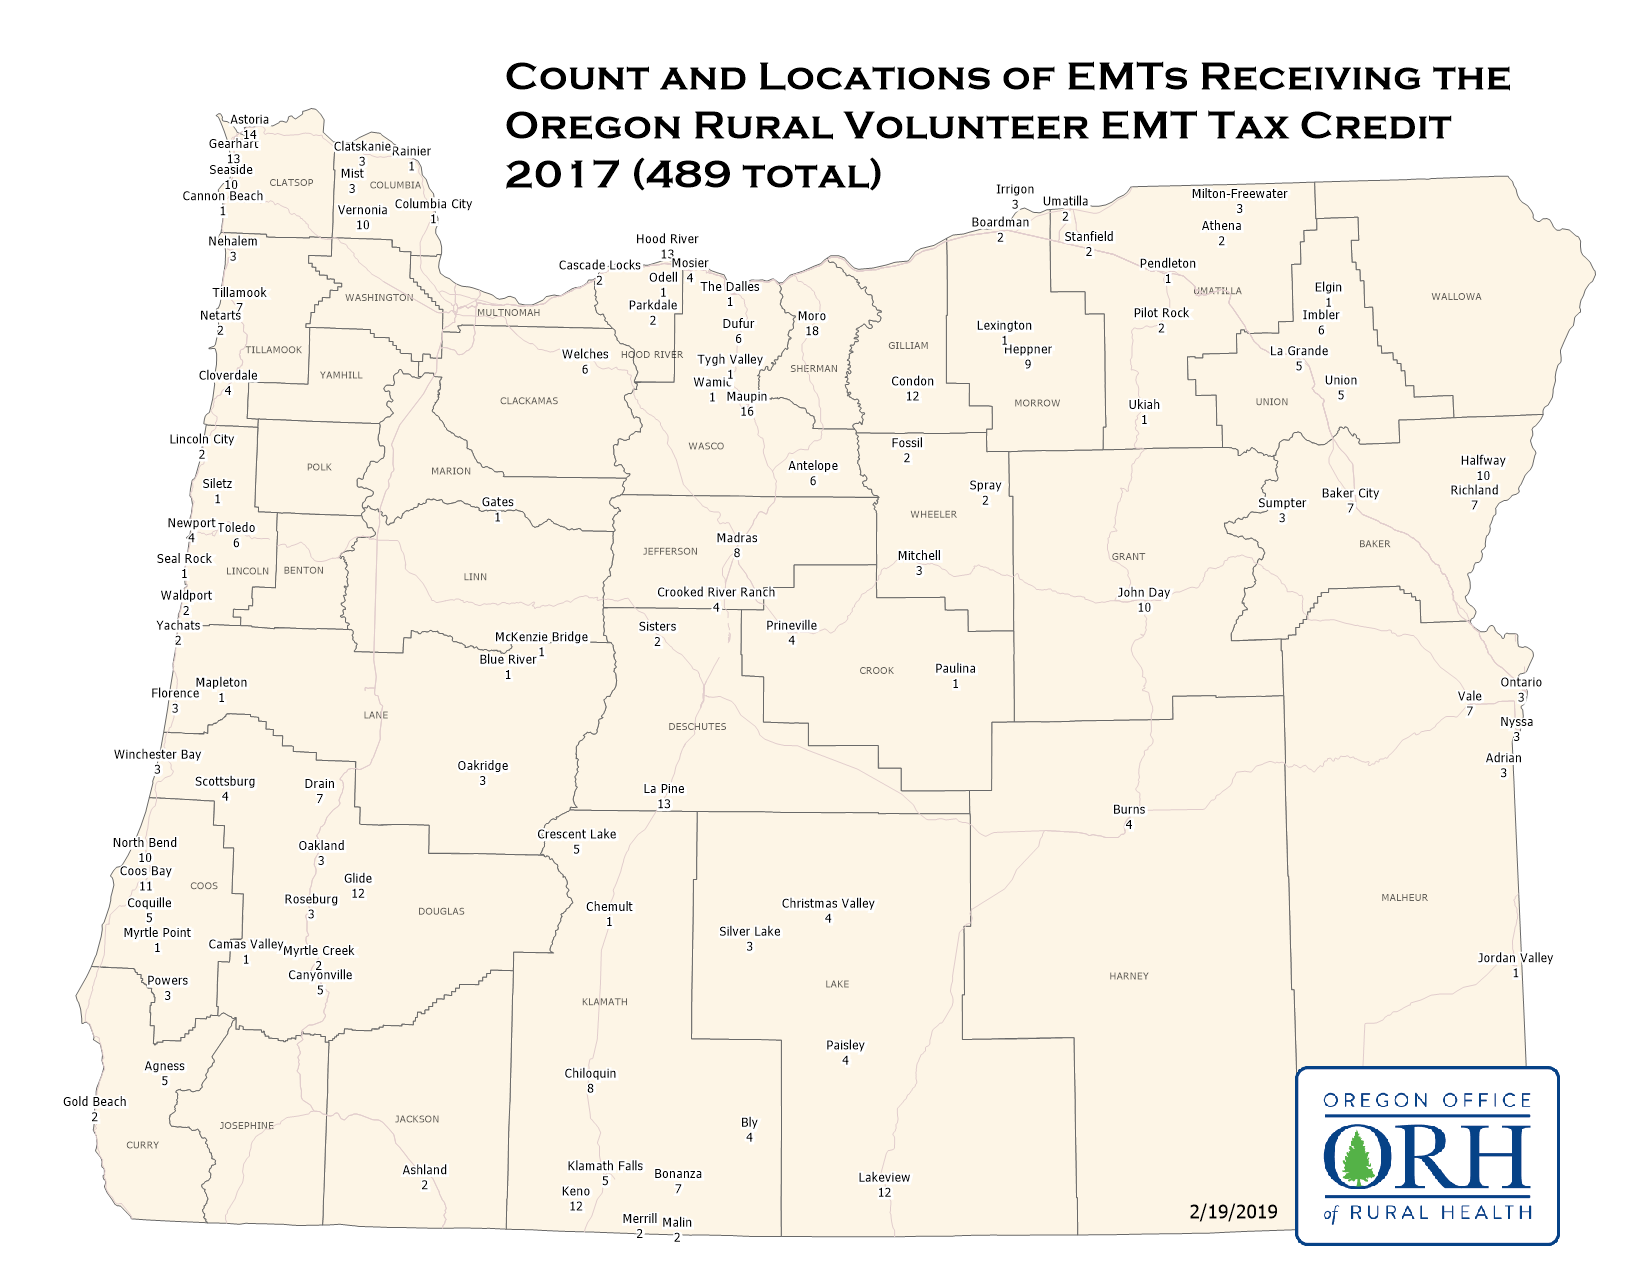 Rural Volunteer Emergency Medical Service Provider Tax Credit Recipients map